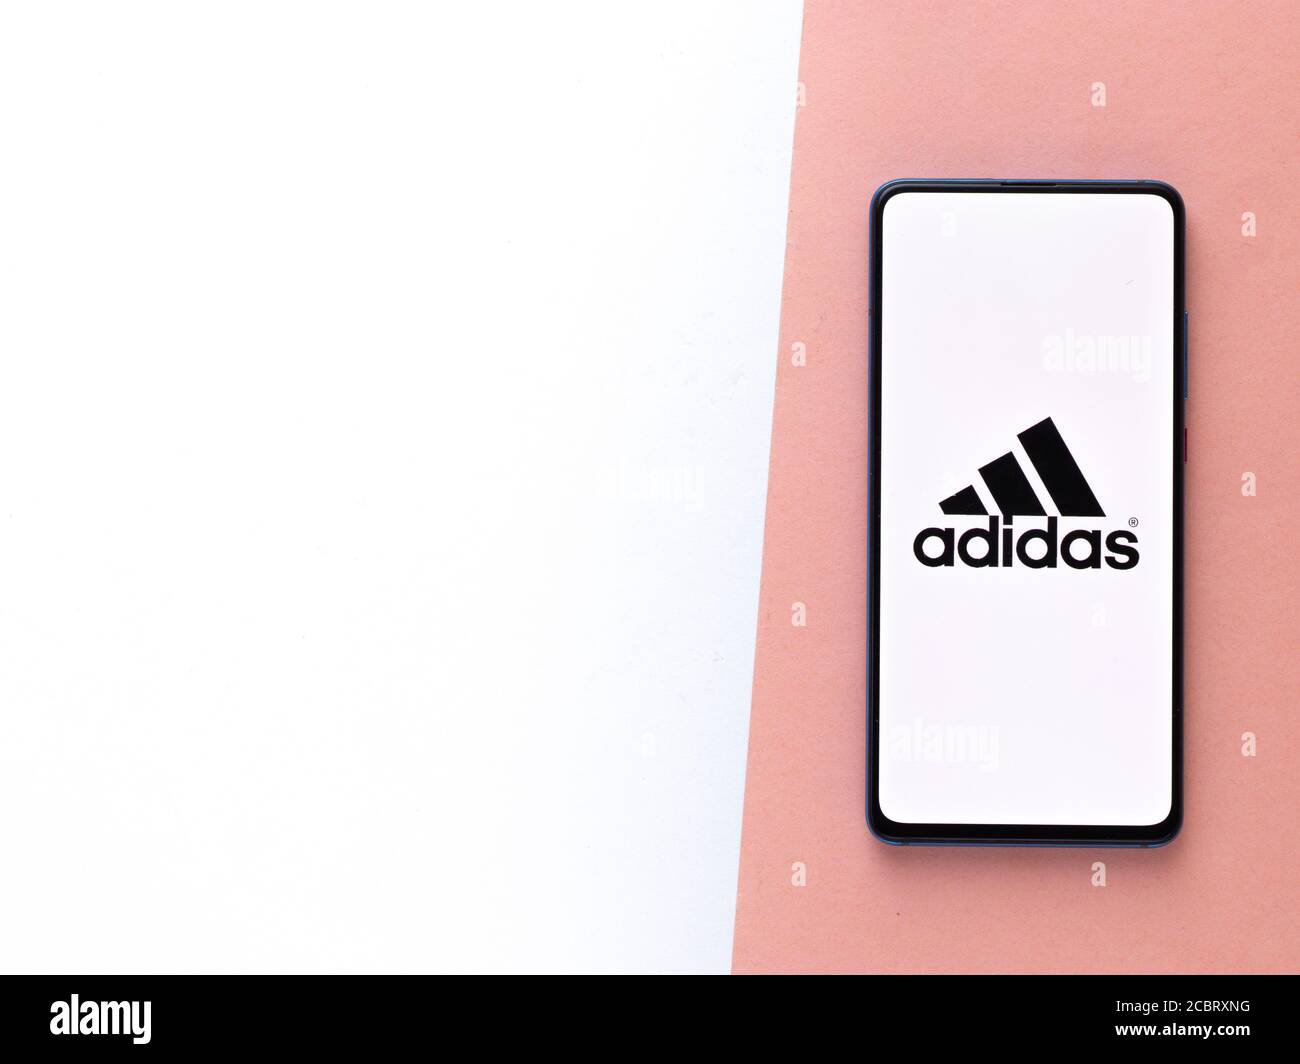 Assam, india - Augest 15, 2020 : Adidas a sportswear brand logo on phone  screen Stock Photo - Alamy